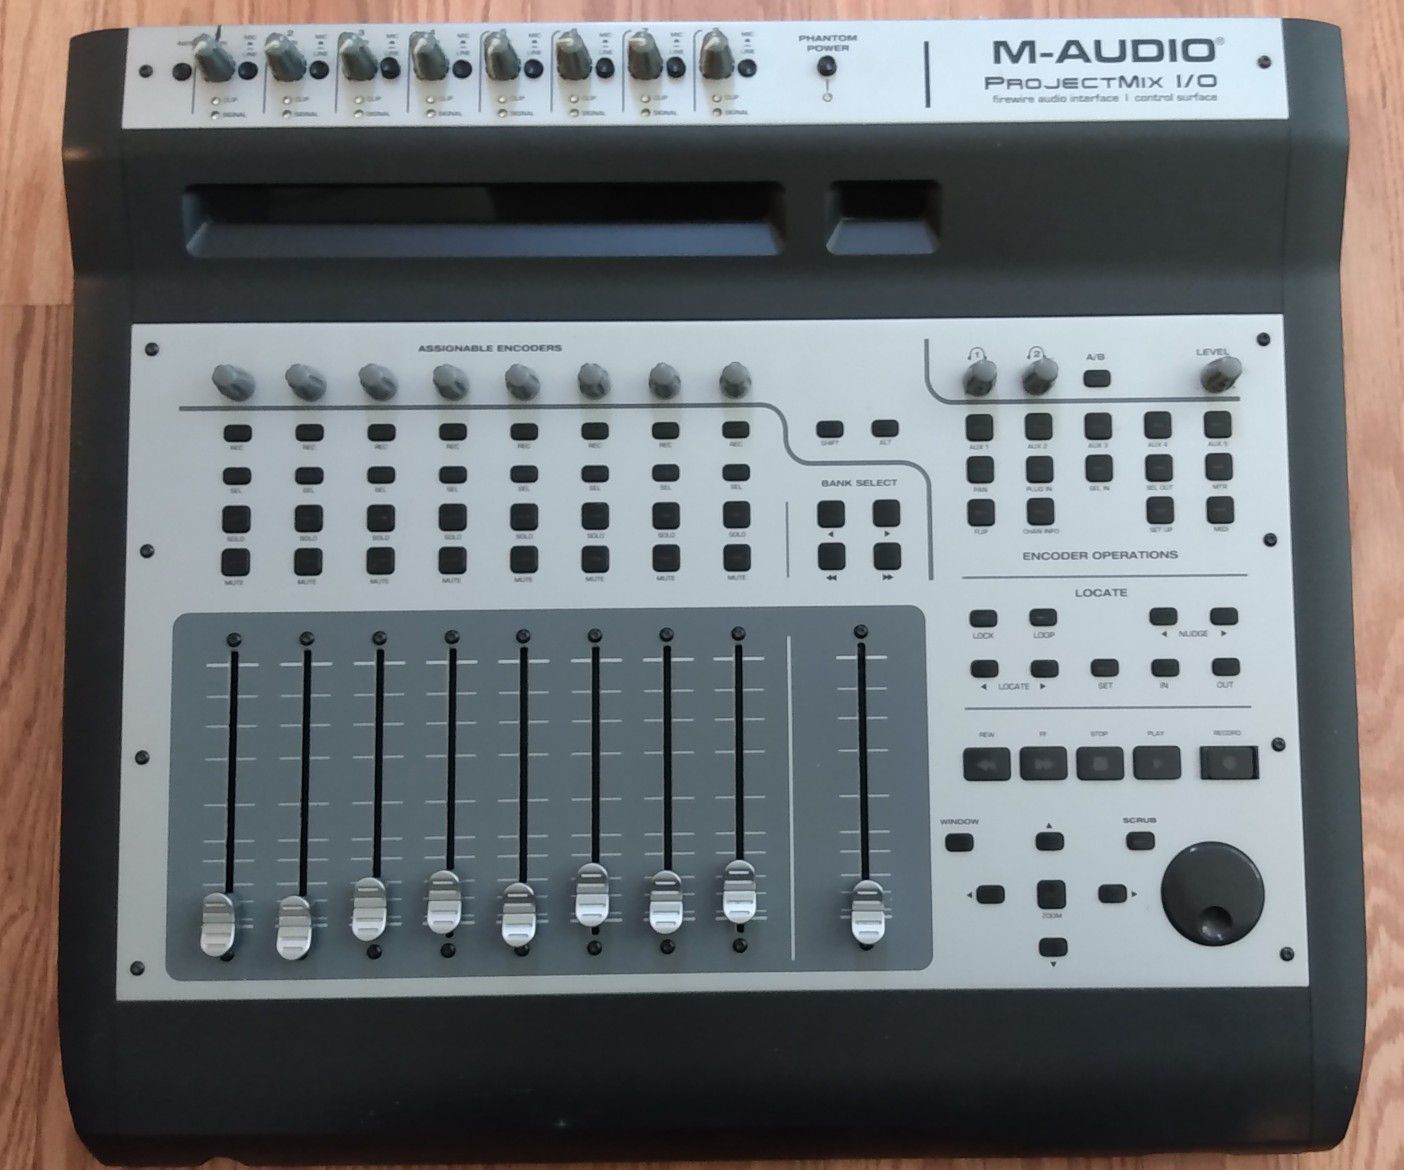 M-Audio Project mix I/O interface